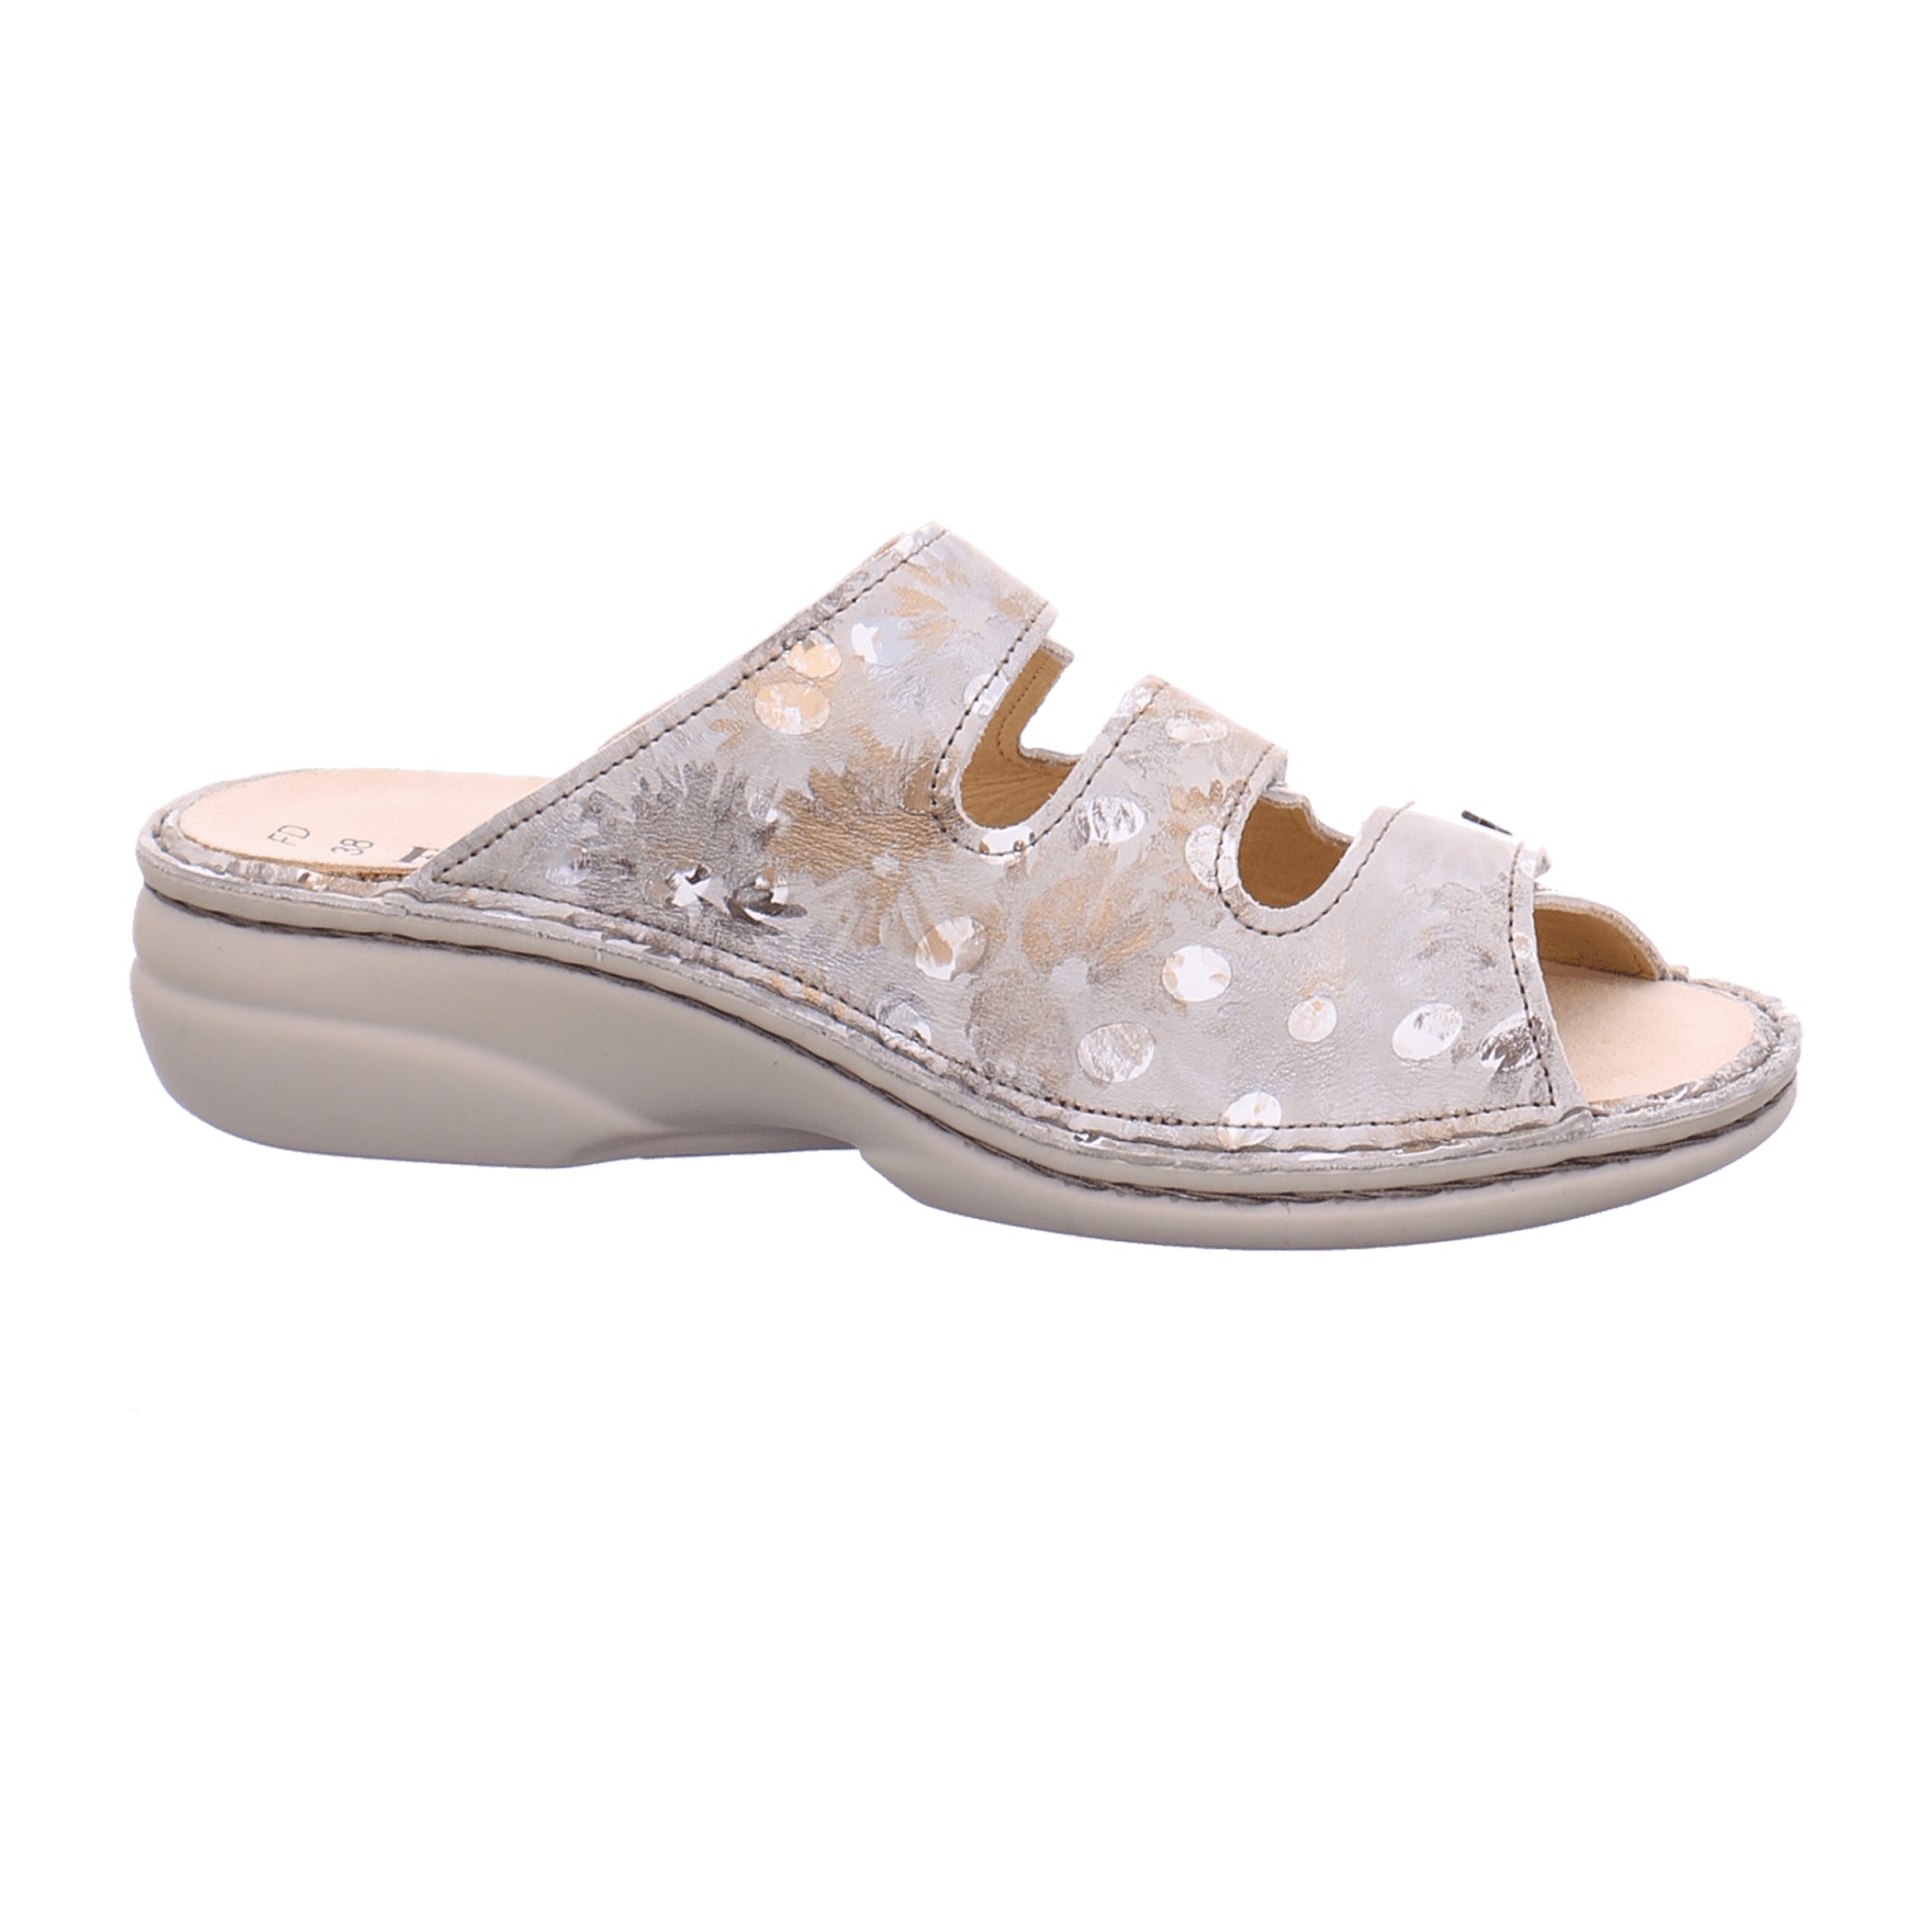 Finn Comfort Menorca-S Silver Sandals for Women - Stylish & Comfortable